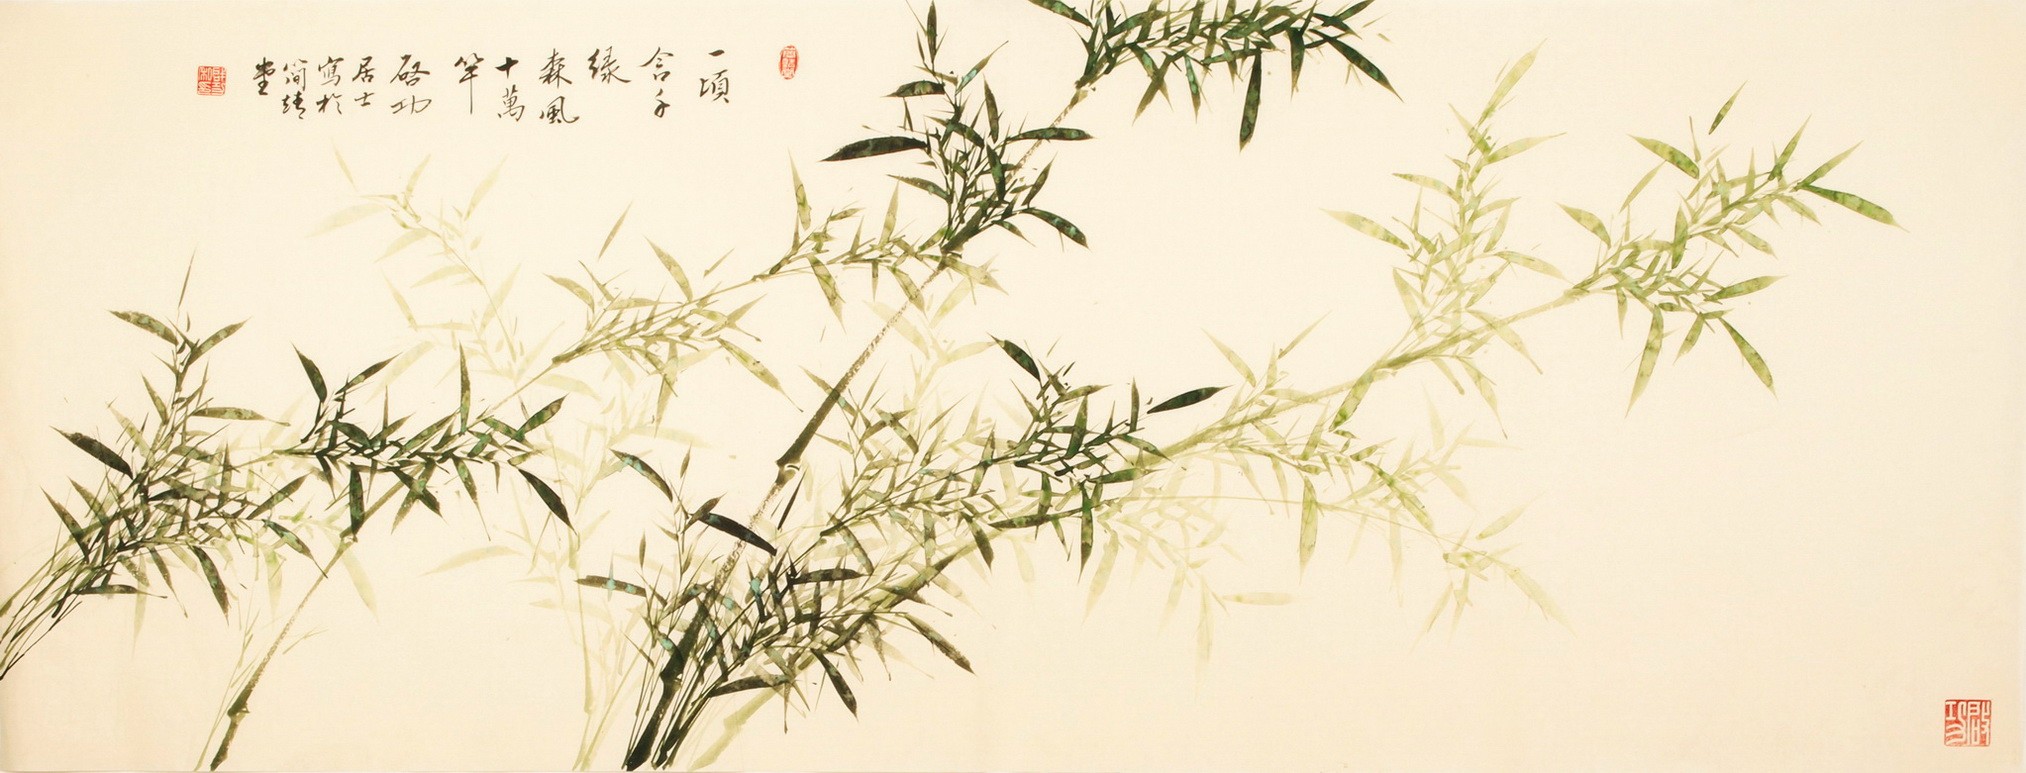 Green Bamboo - CNAG001318